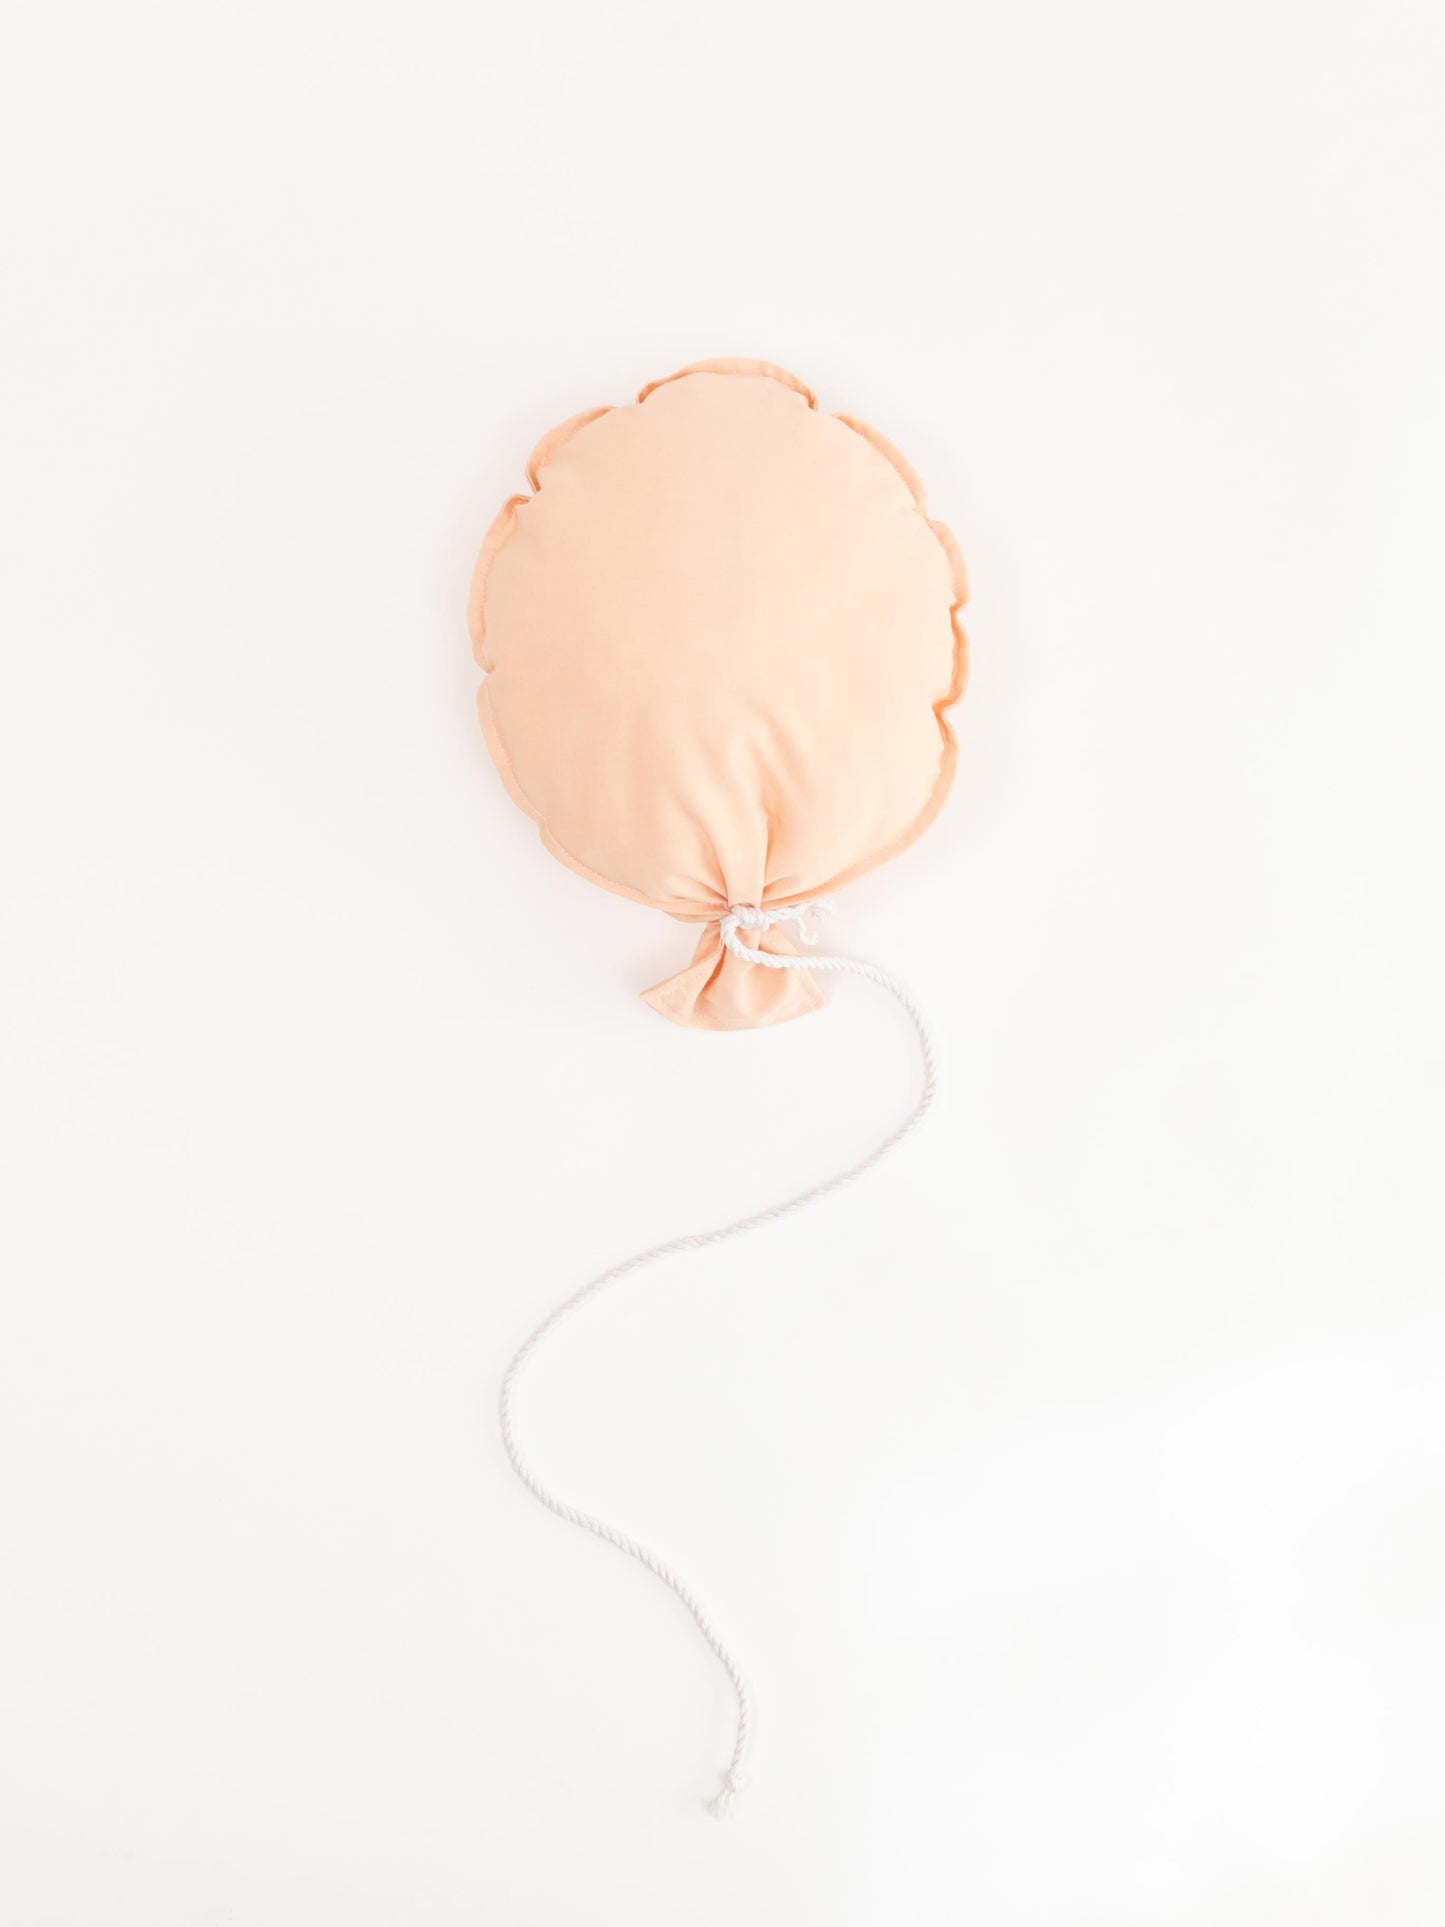 Kinderzimmer Wanddeko 'Stoff-Luftballon' Aprikose handmade